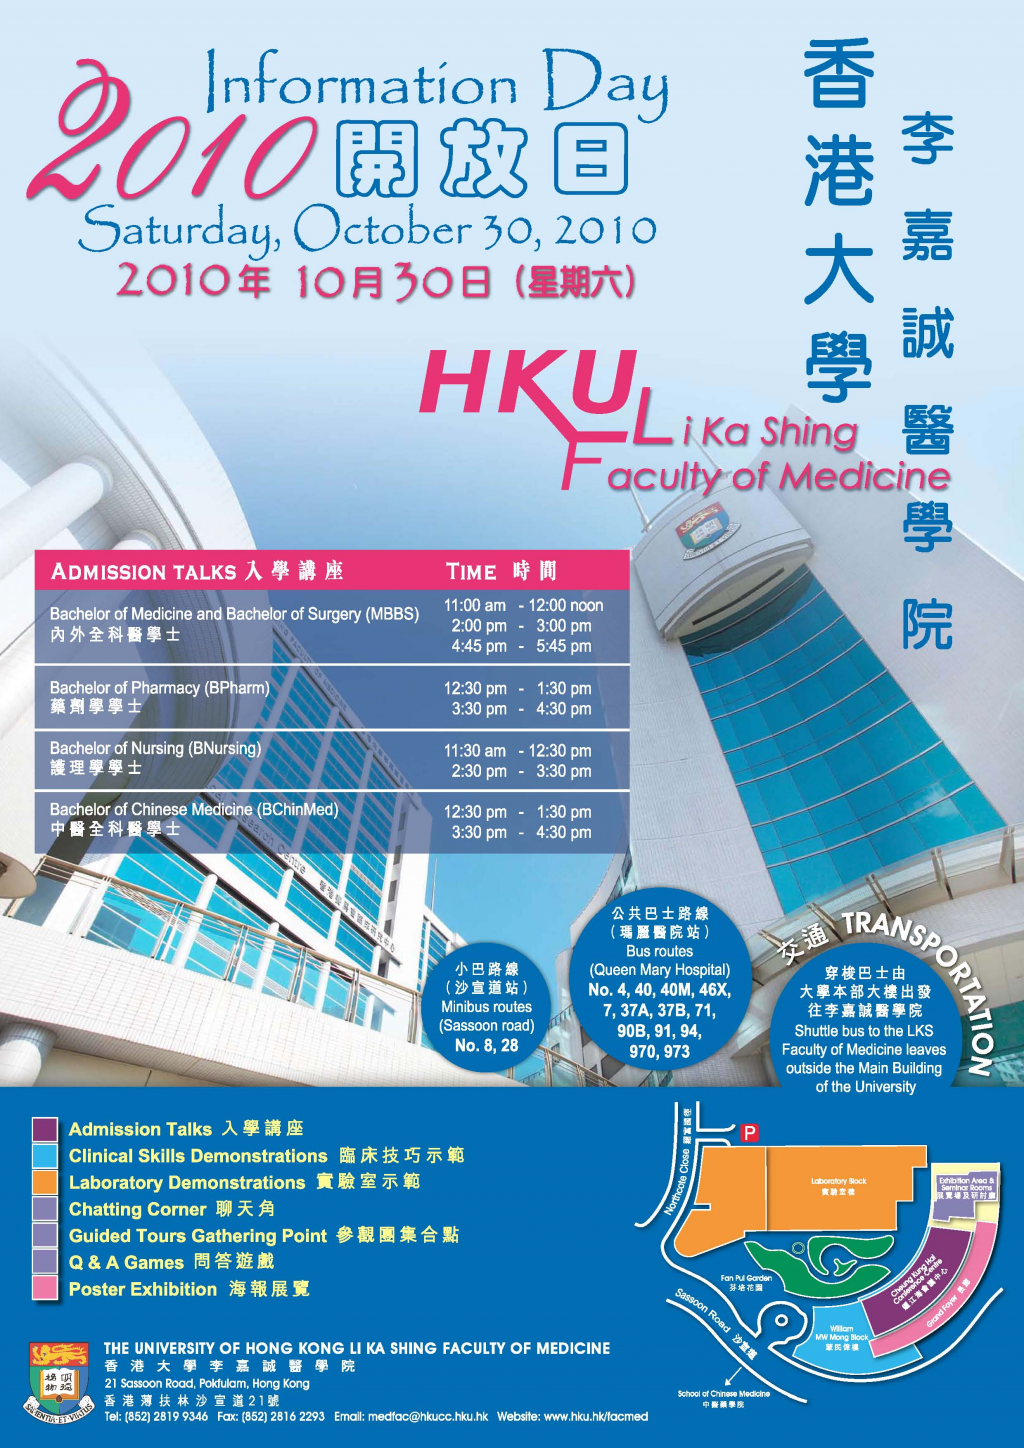 Information Day 2010 - HKU Li Ka Shing Faculty of Medicine